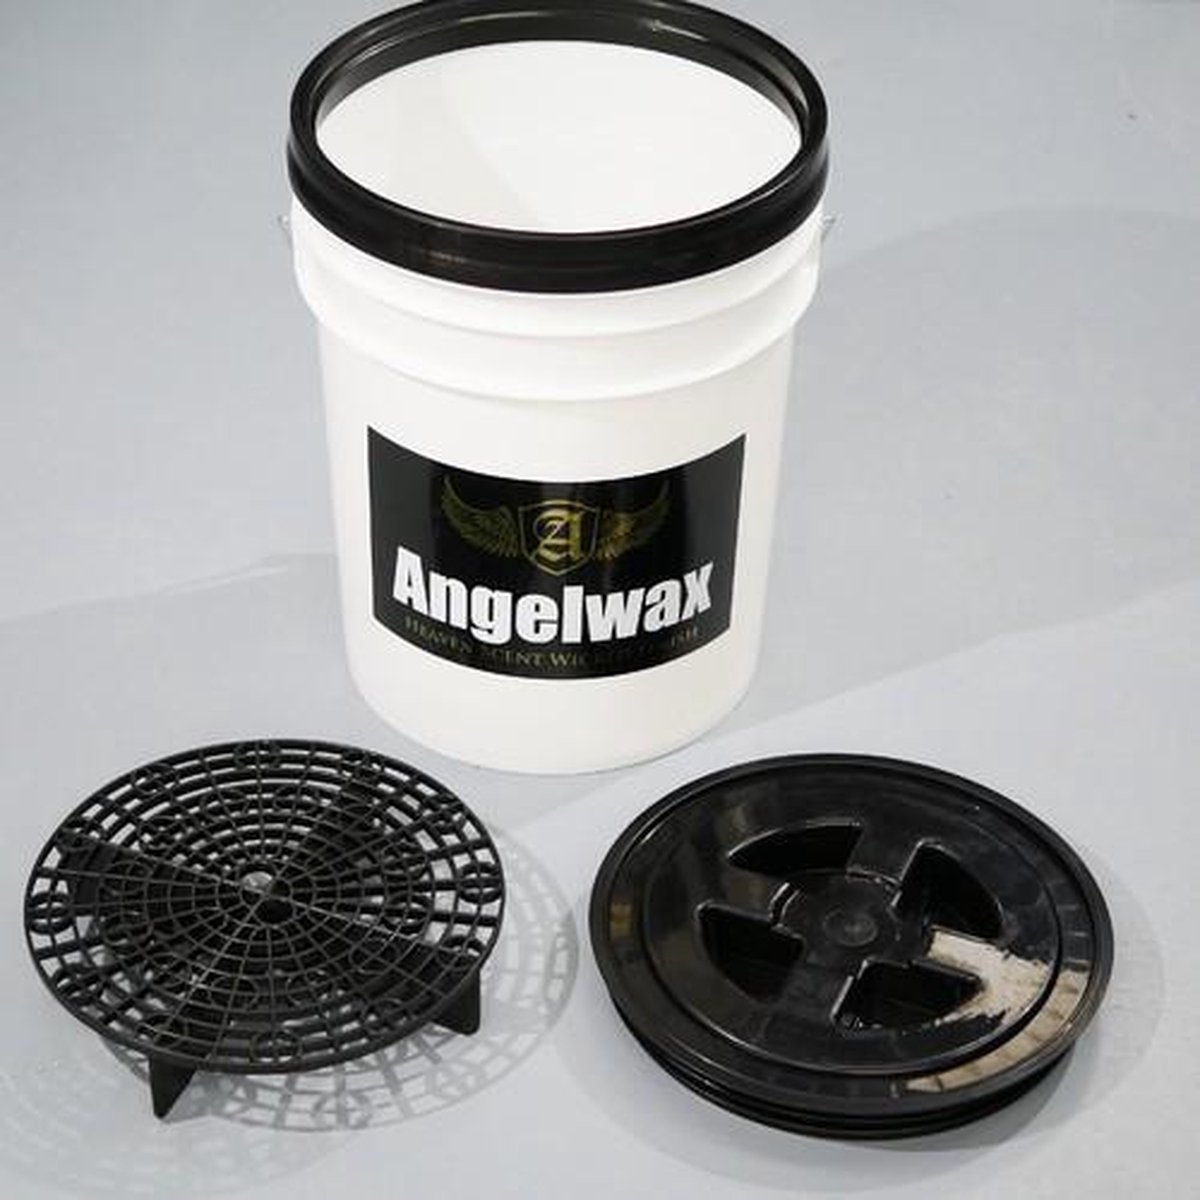 Angelwax 20 liter bucket grittgard cover